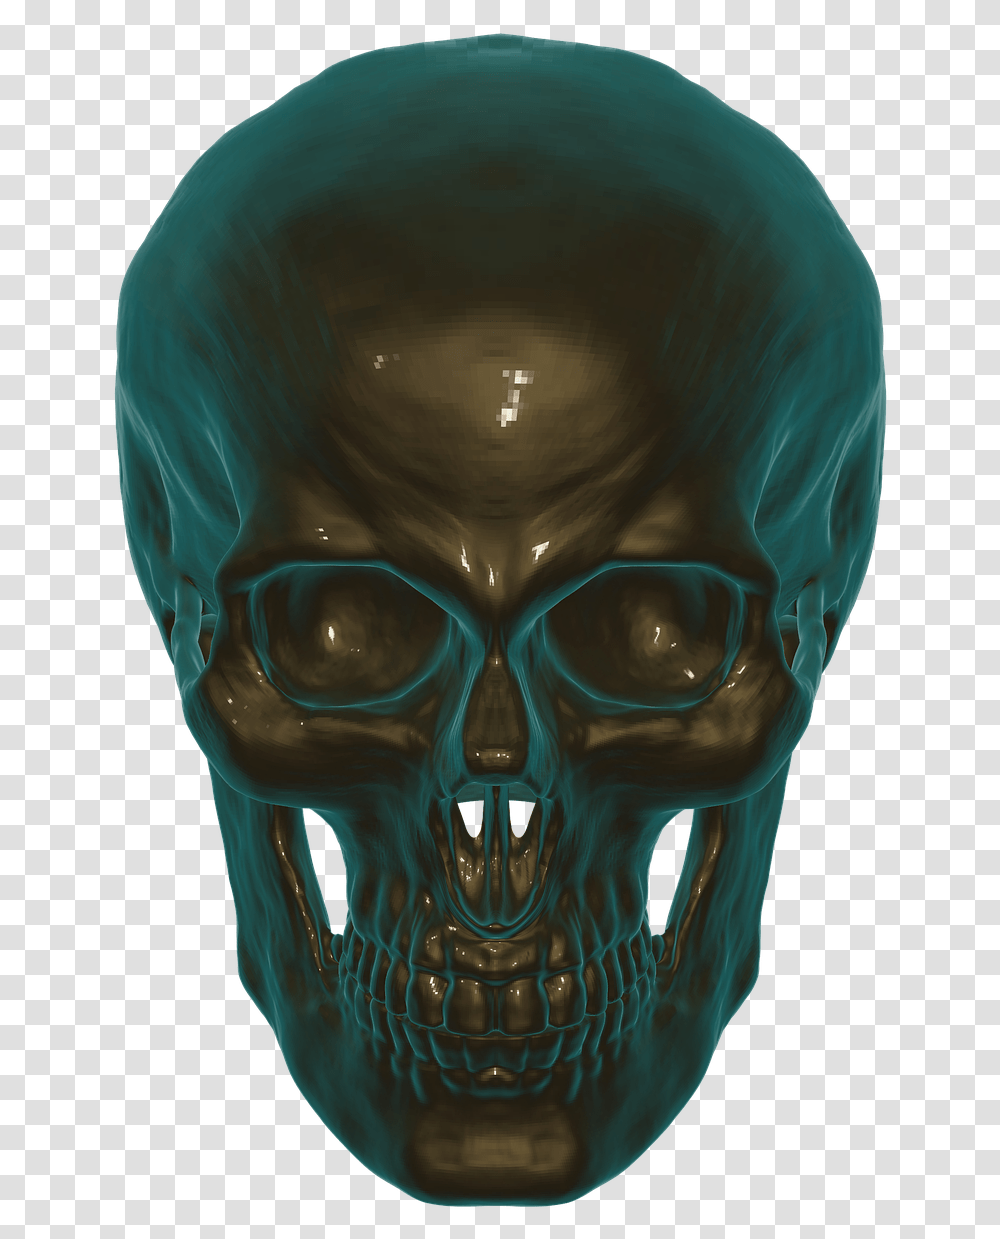 Skull Anatomy Skull And Crossbones Free Photo 3d Human Skull, Alien, Sunglasses, Accessories, Head Transparent Png